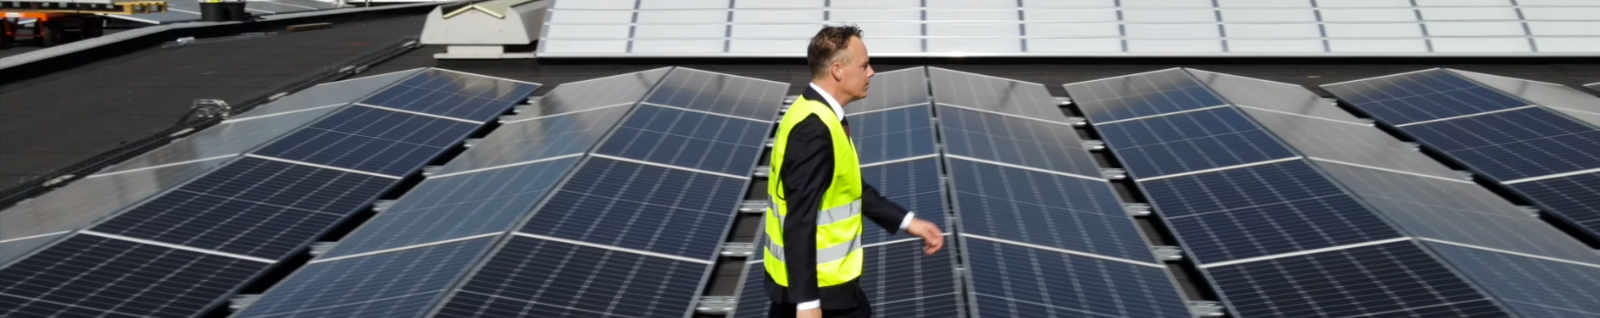 Van Leeuwen is investing in generating green energy on its own roof